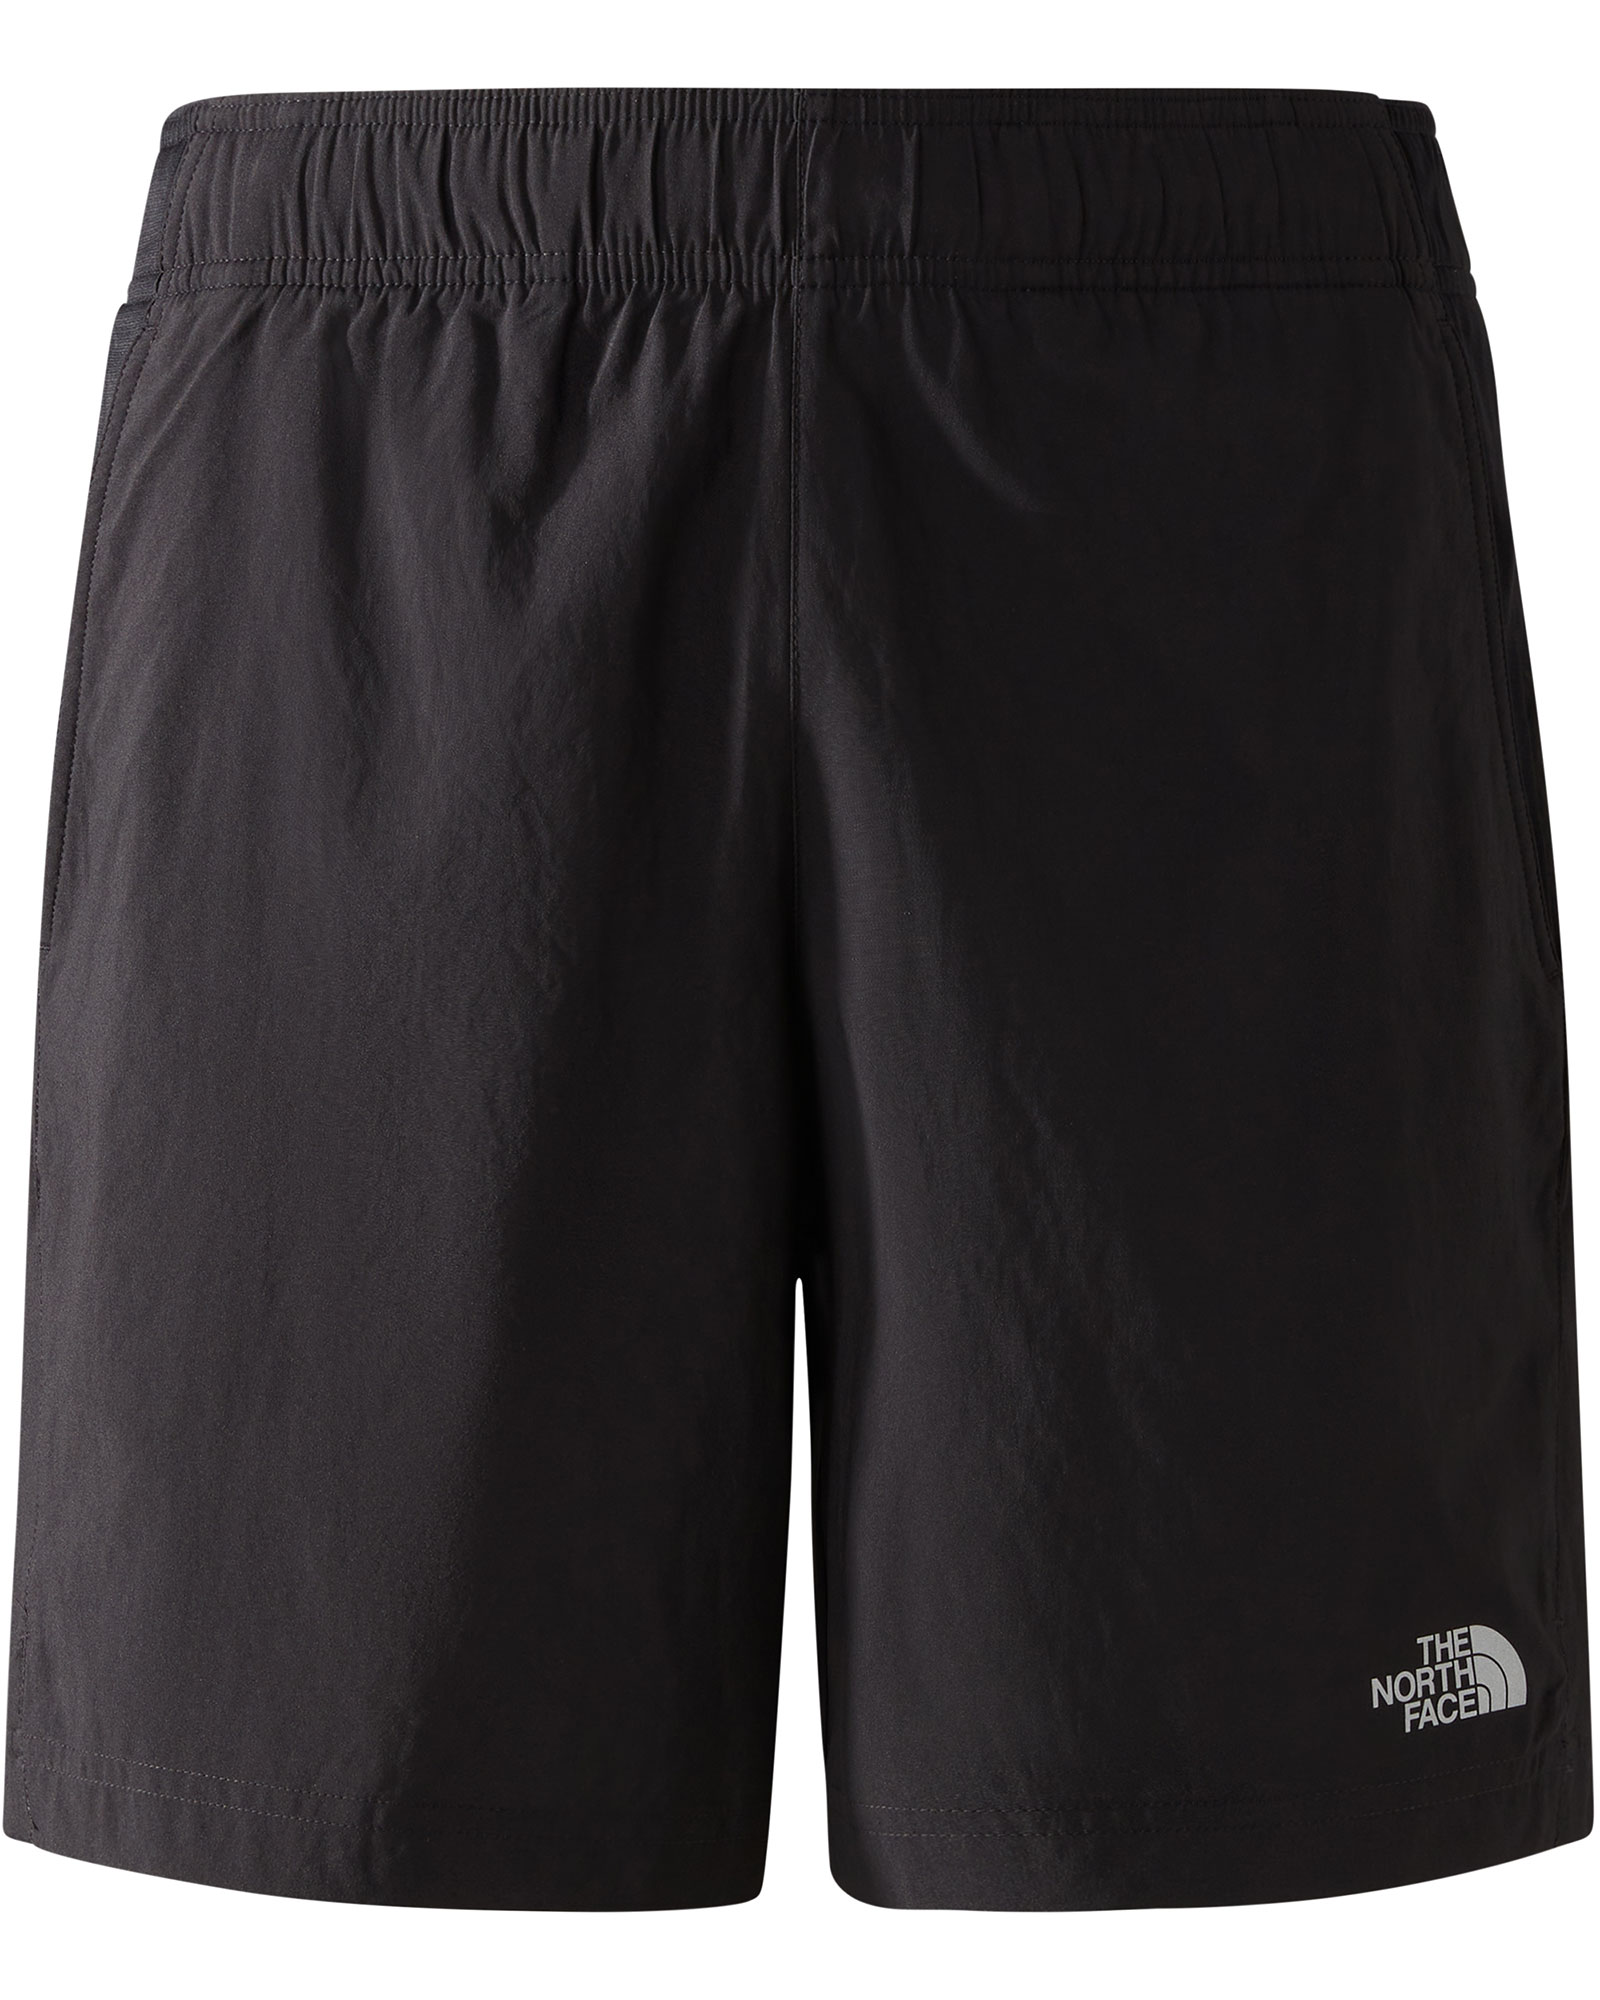 The North Face 24/7 Men’s Shorts - TNF Black XL